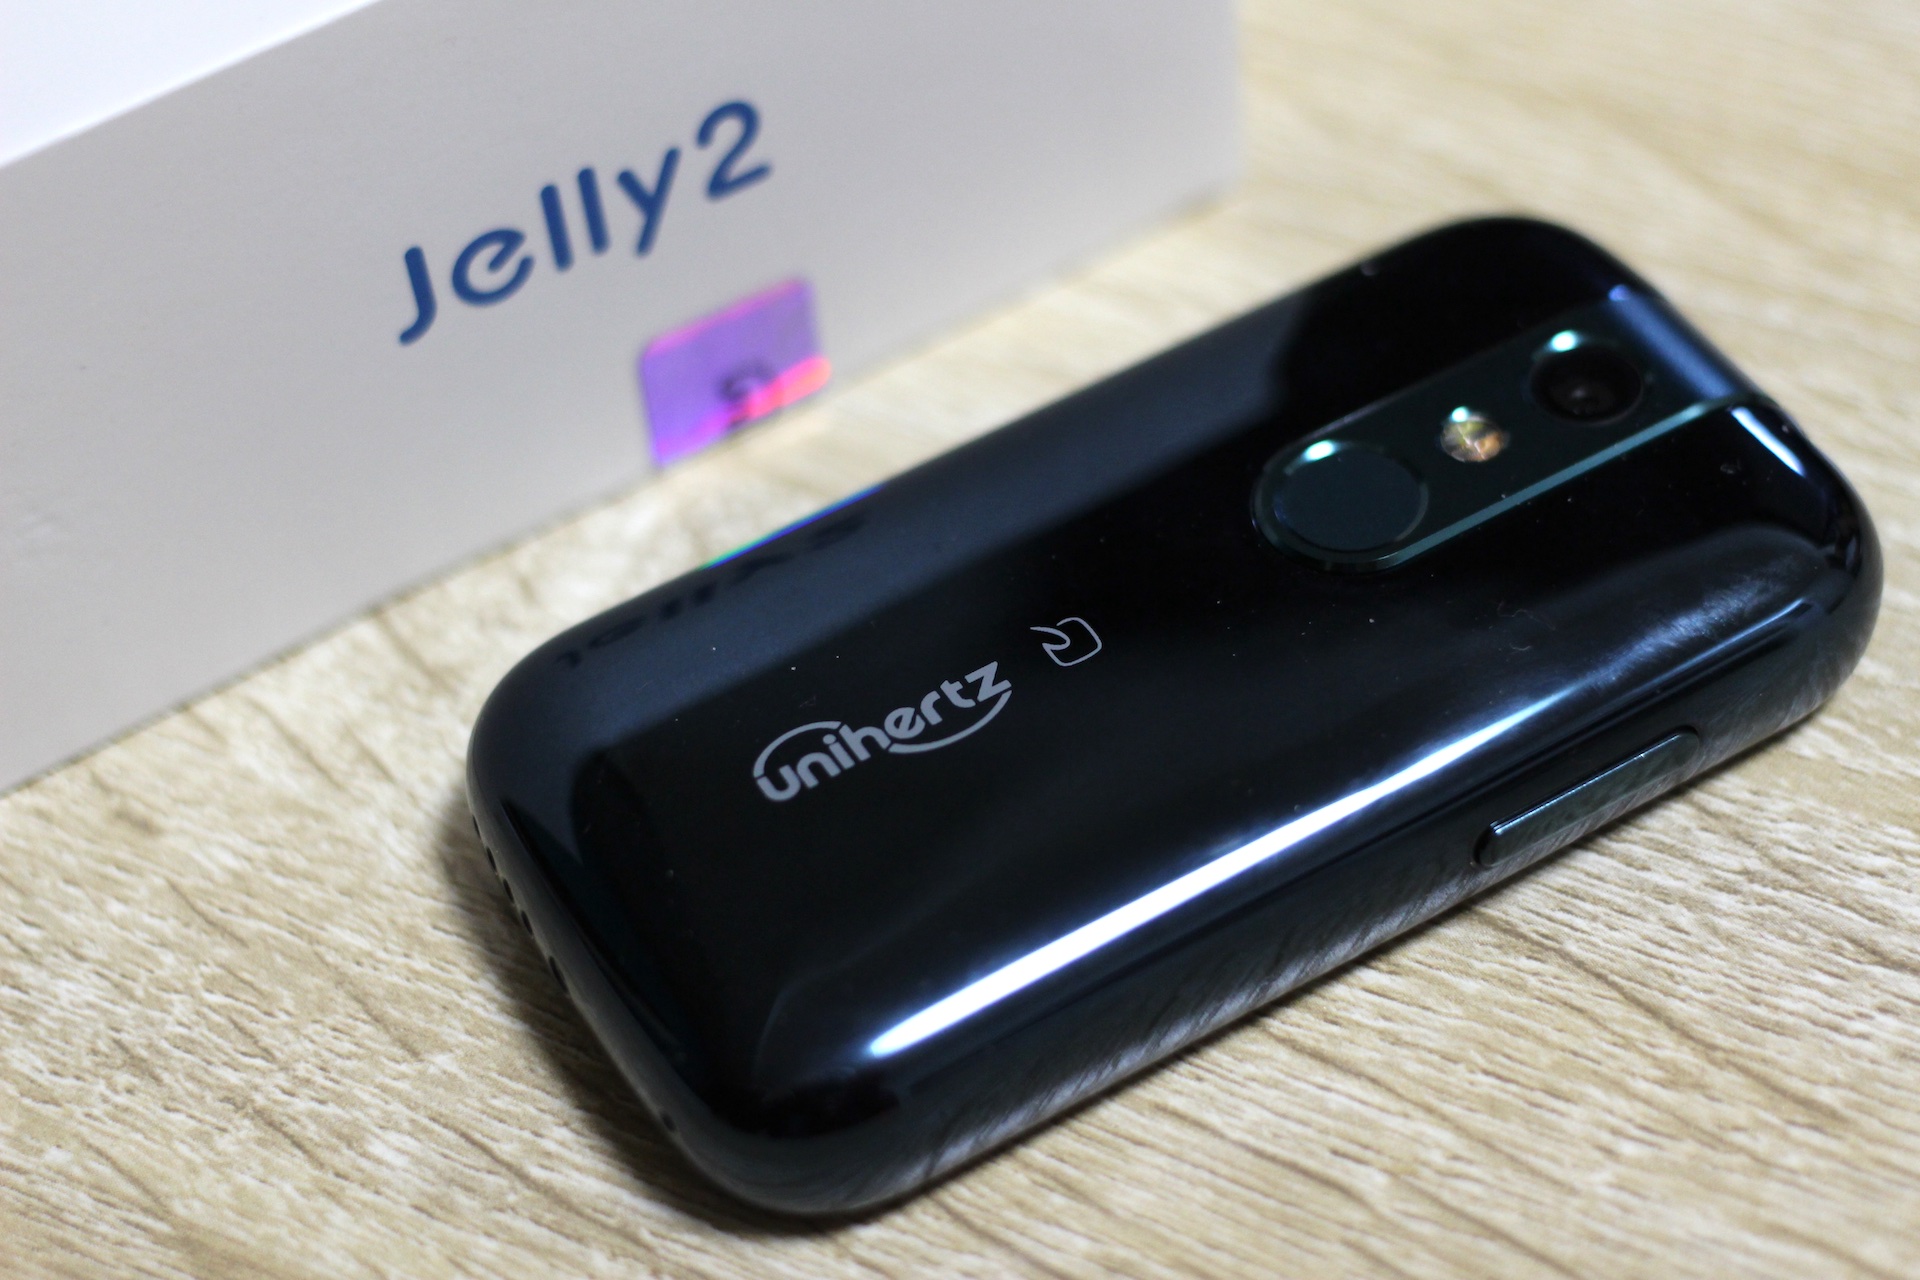 Unihertz 超小型simフリースマホ Jelly 2 のfelica対応日本版を一般販売開始 予約受付中で3月5日より順次発送 価格は約2万3千円 S Max